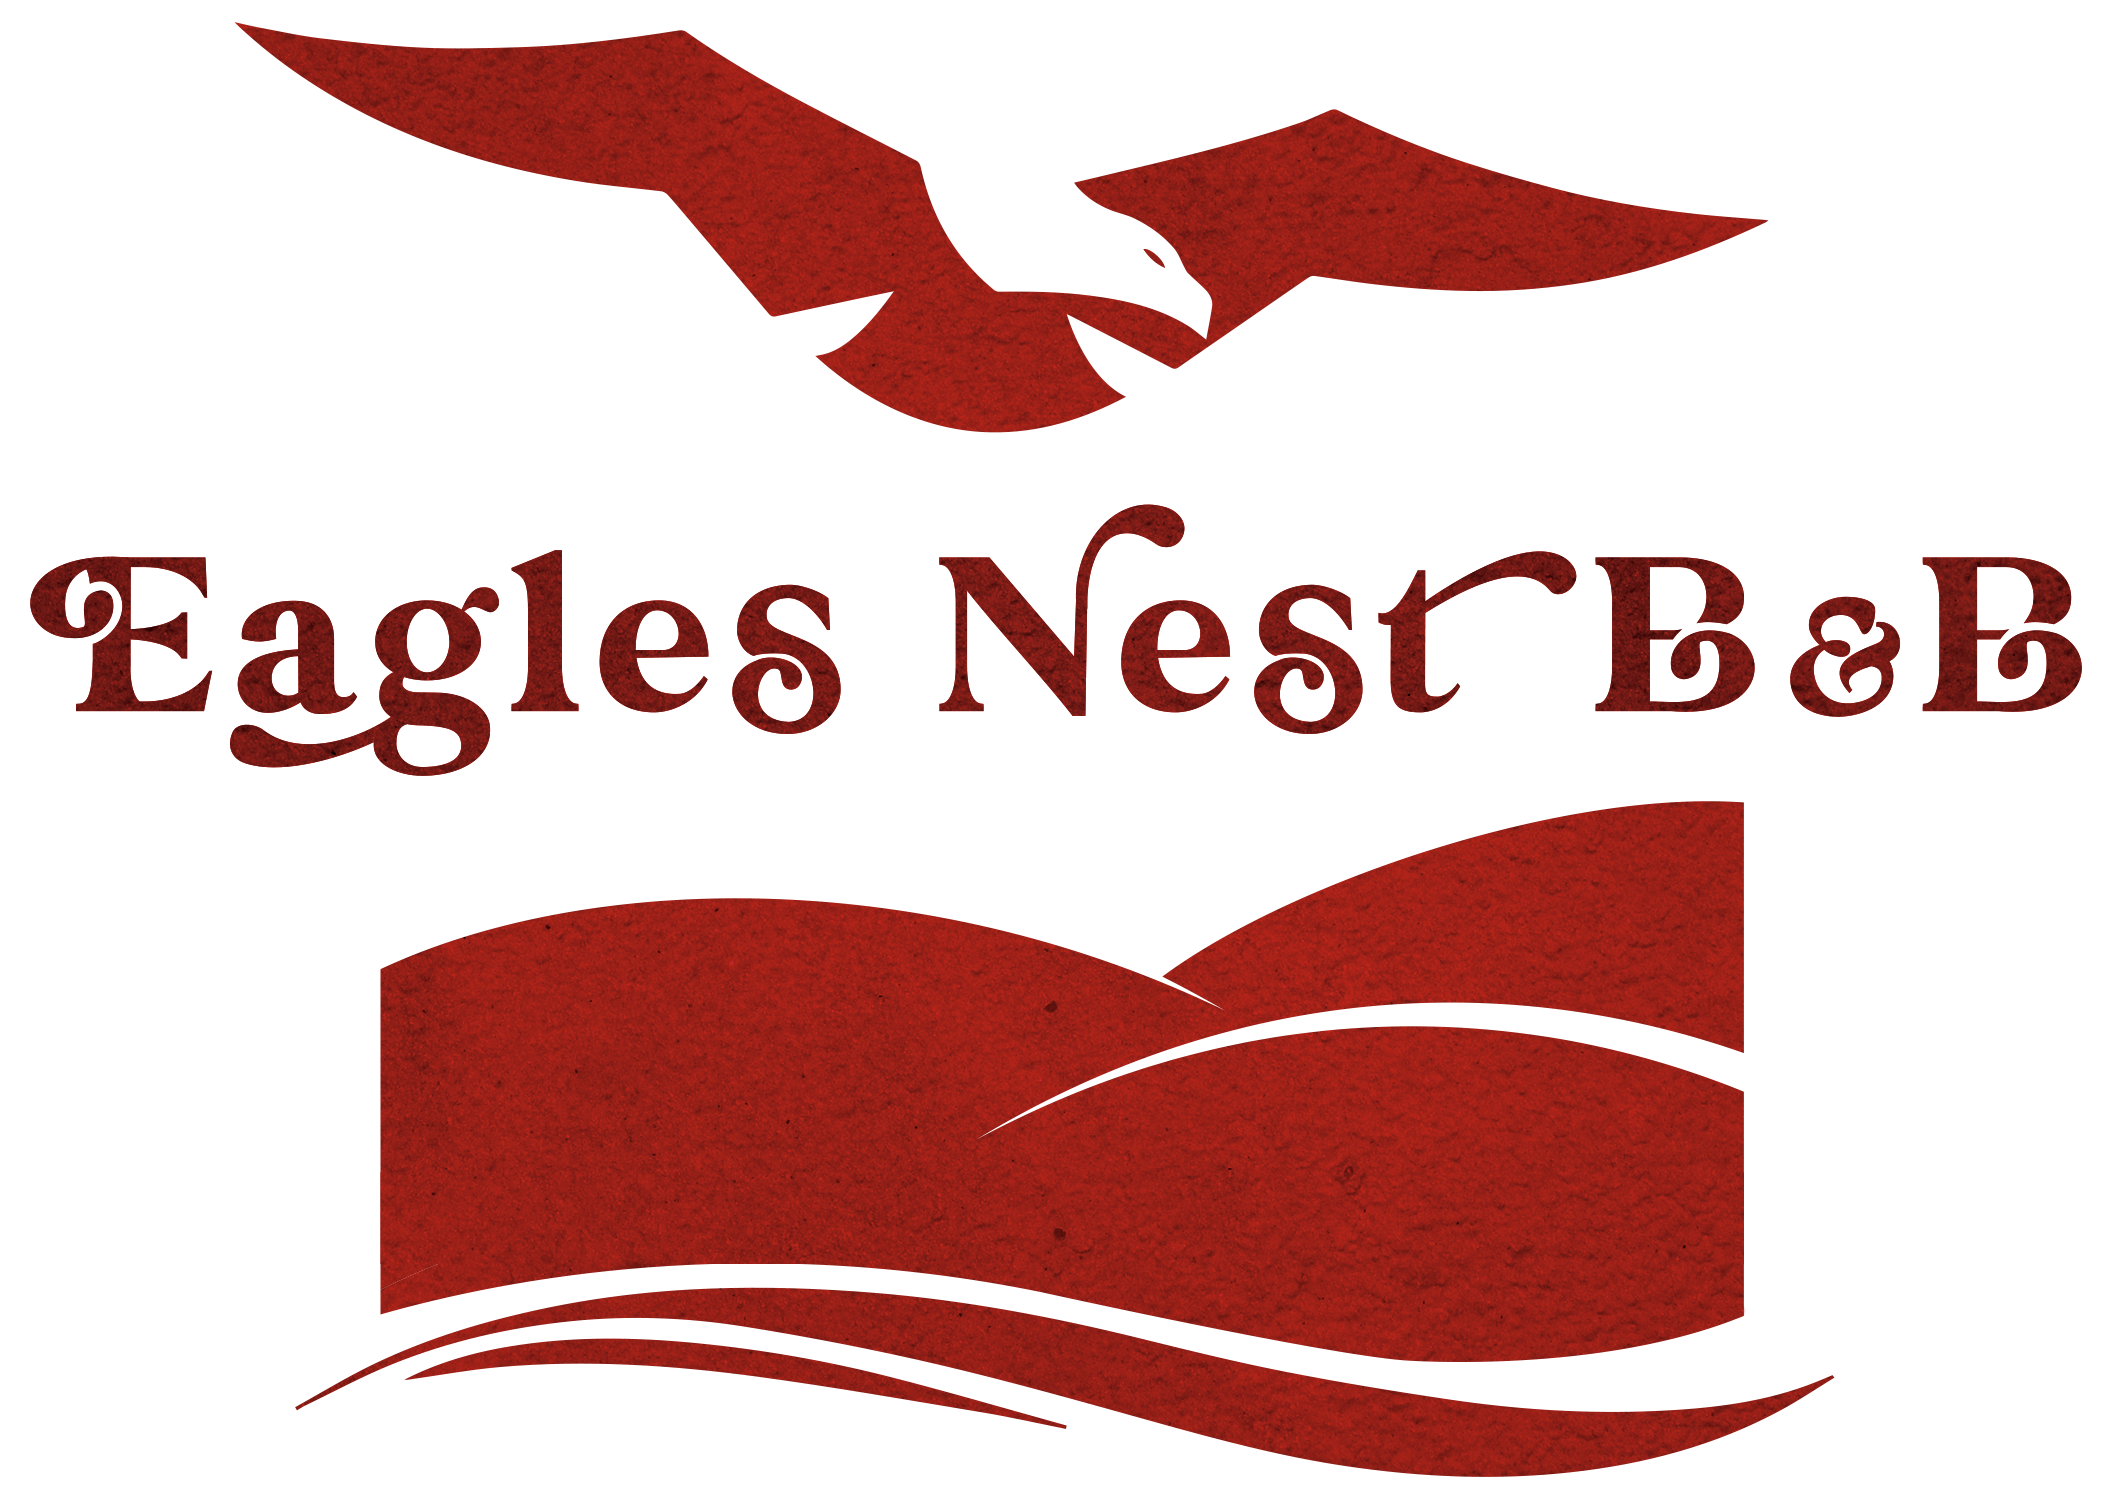 Eagles Nest B & B